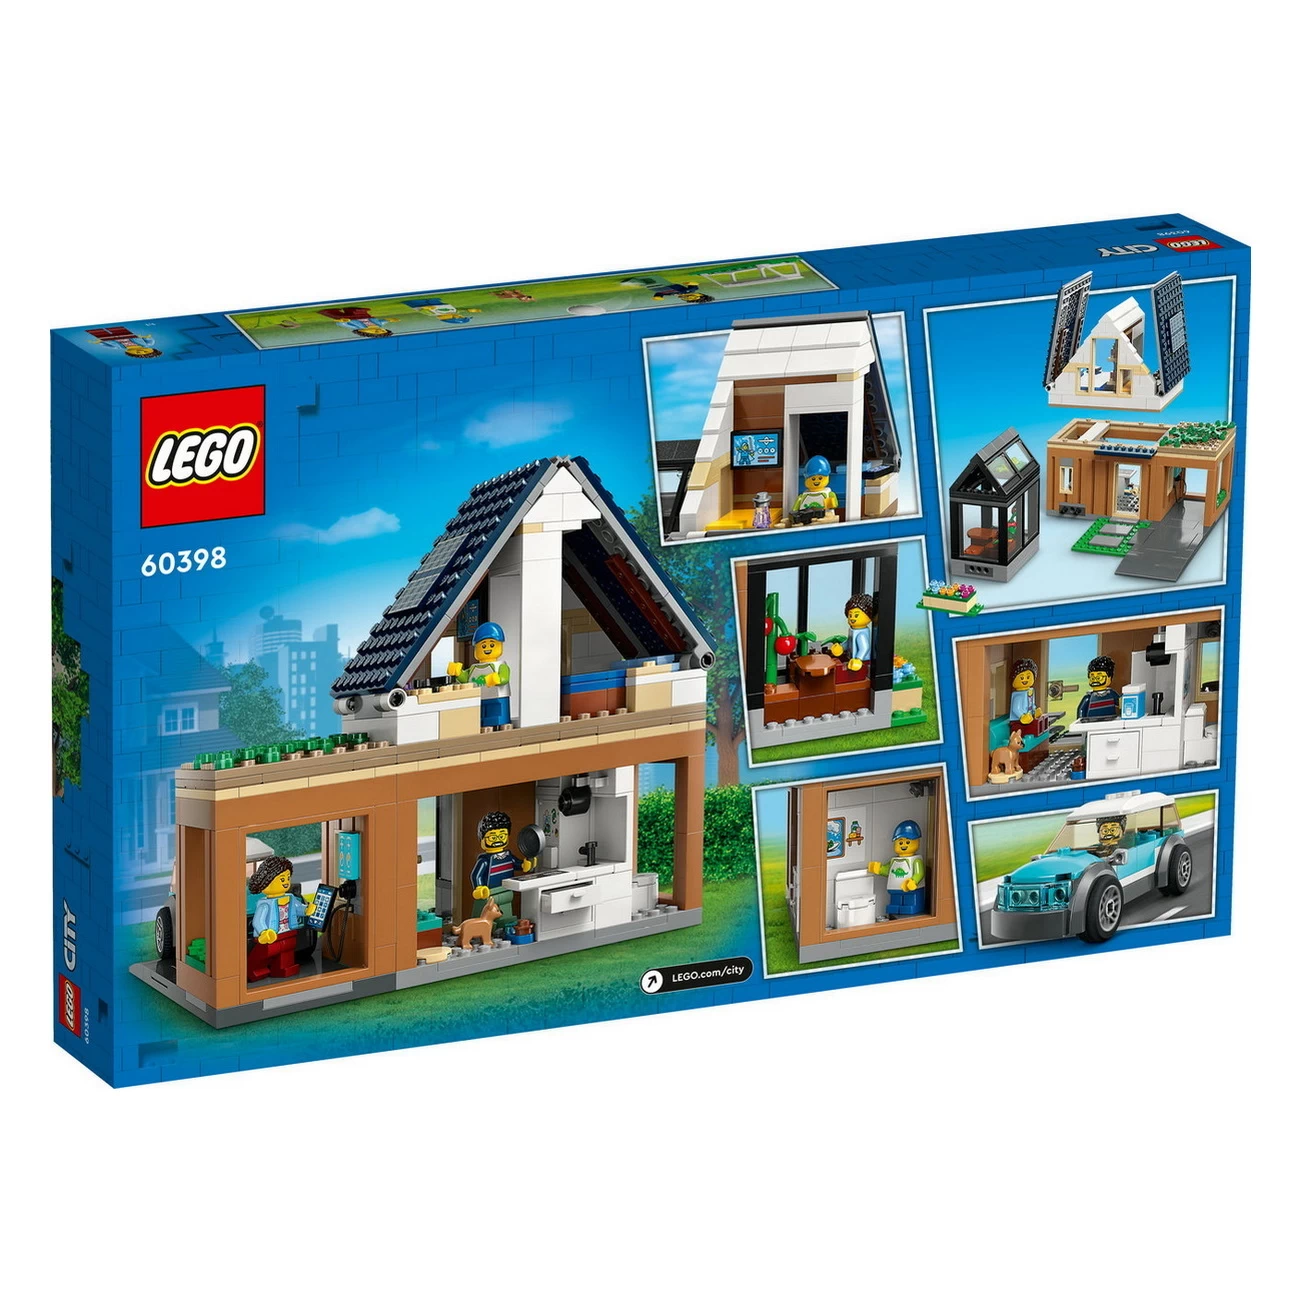 LEGO City 60398 - Familienhaus mit Elektroauto